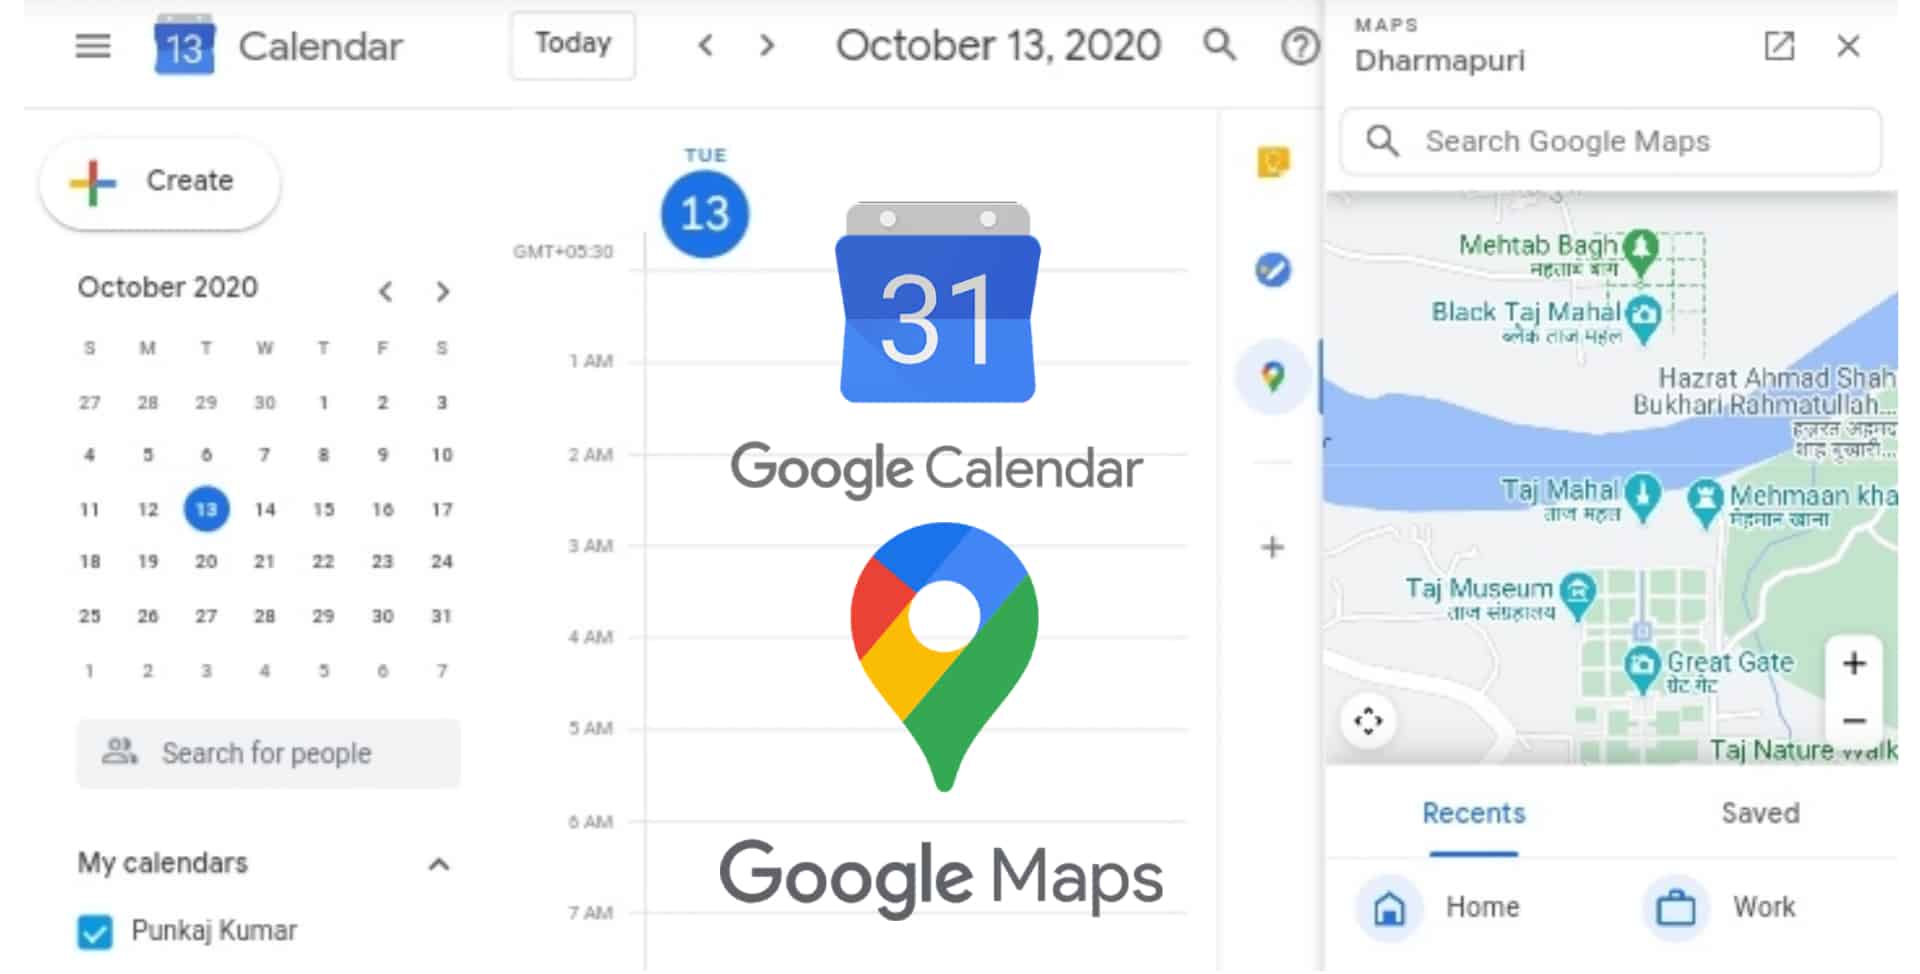 Google Calendar Side Panel Gets Google Maps Addon For Quick Access